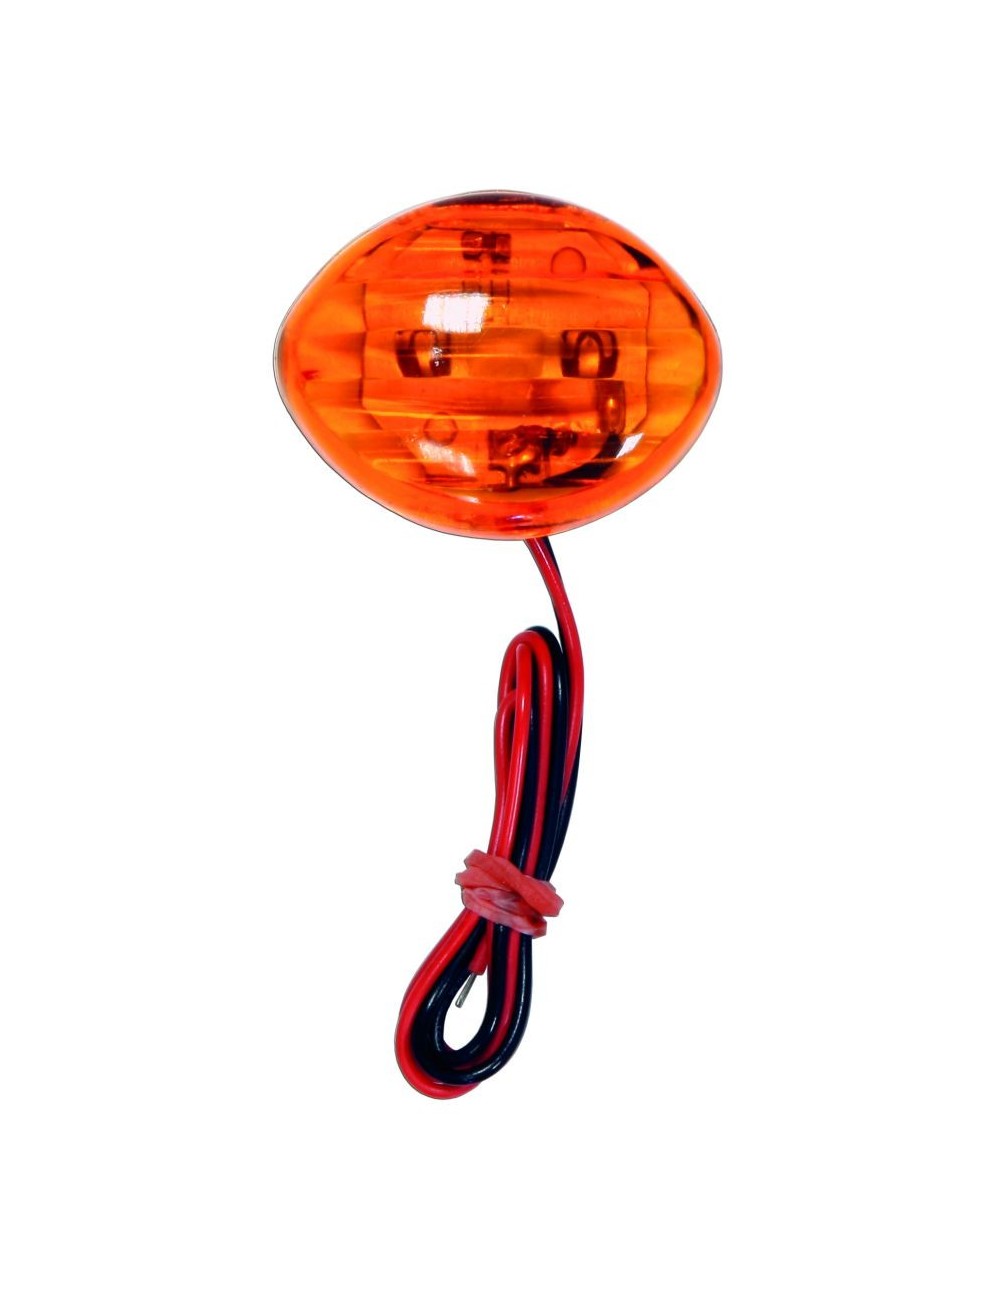 LED Sifam Mini Clignotant LED C.E Ovale Orange 35 x 30mm - Vendu a lunite